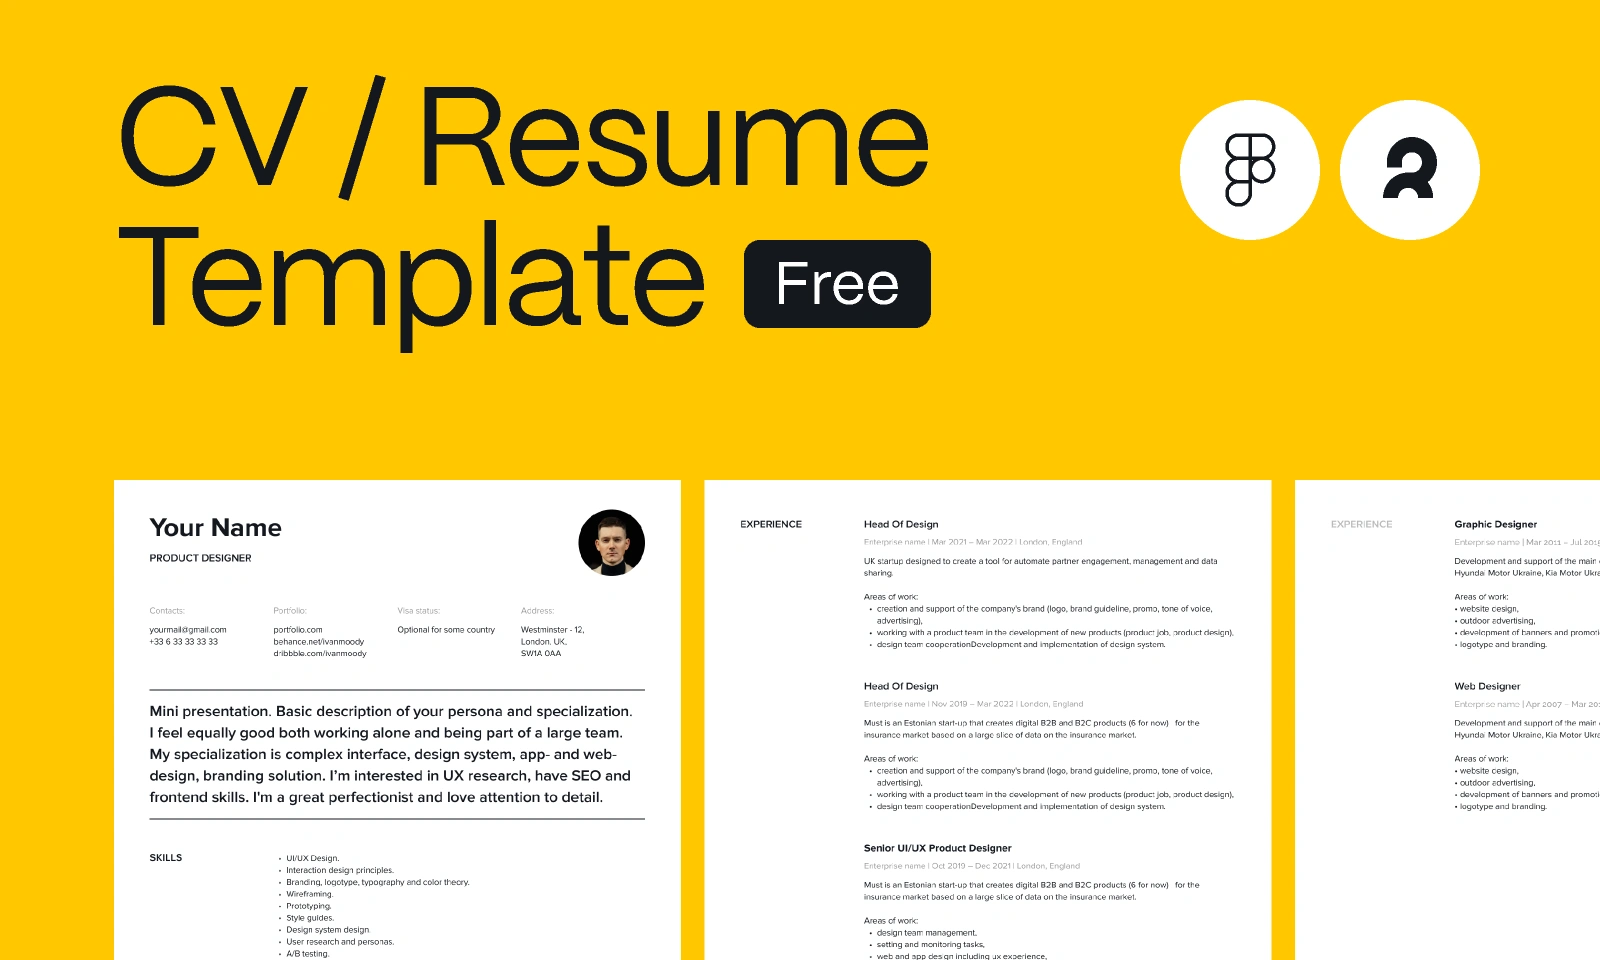 CV / Resume Template Free